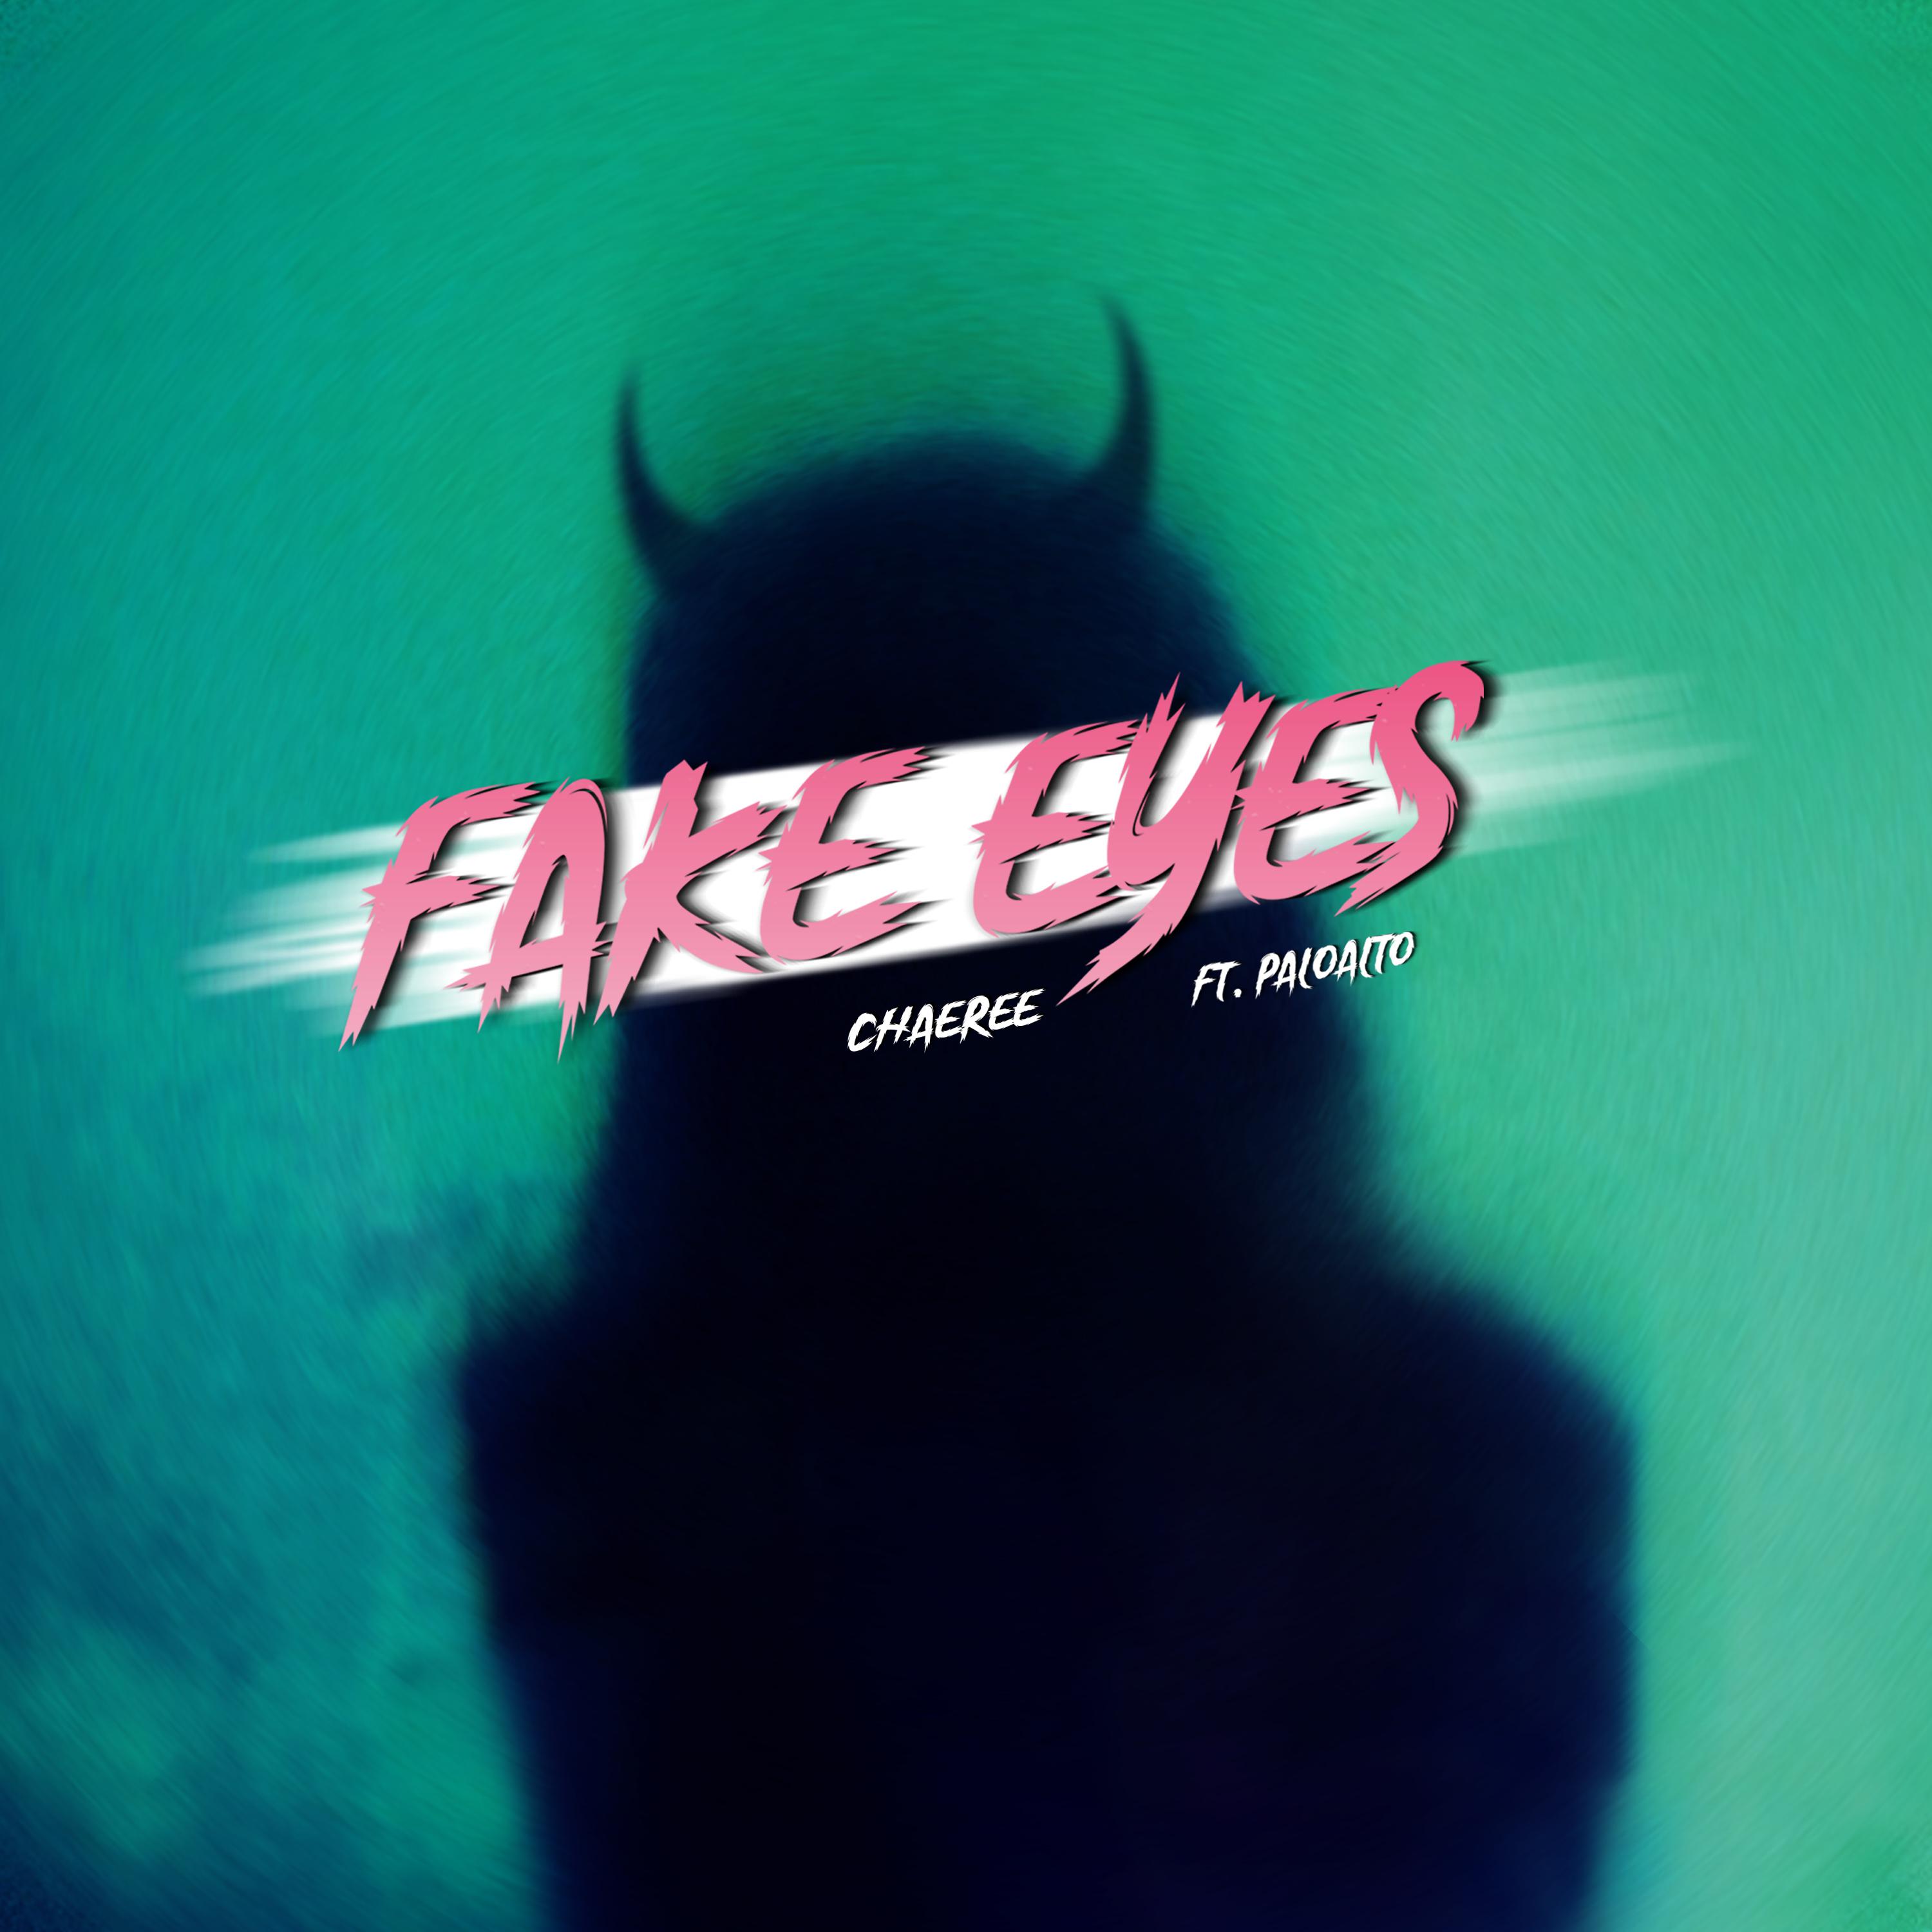 Fake Eyes歌词 歌手Chaeree / Paloalto-专辑Fake Eyes-单曲《Fake Eyes》LRC歌词下载